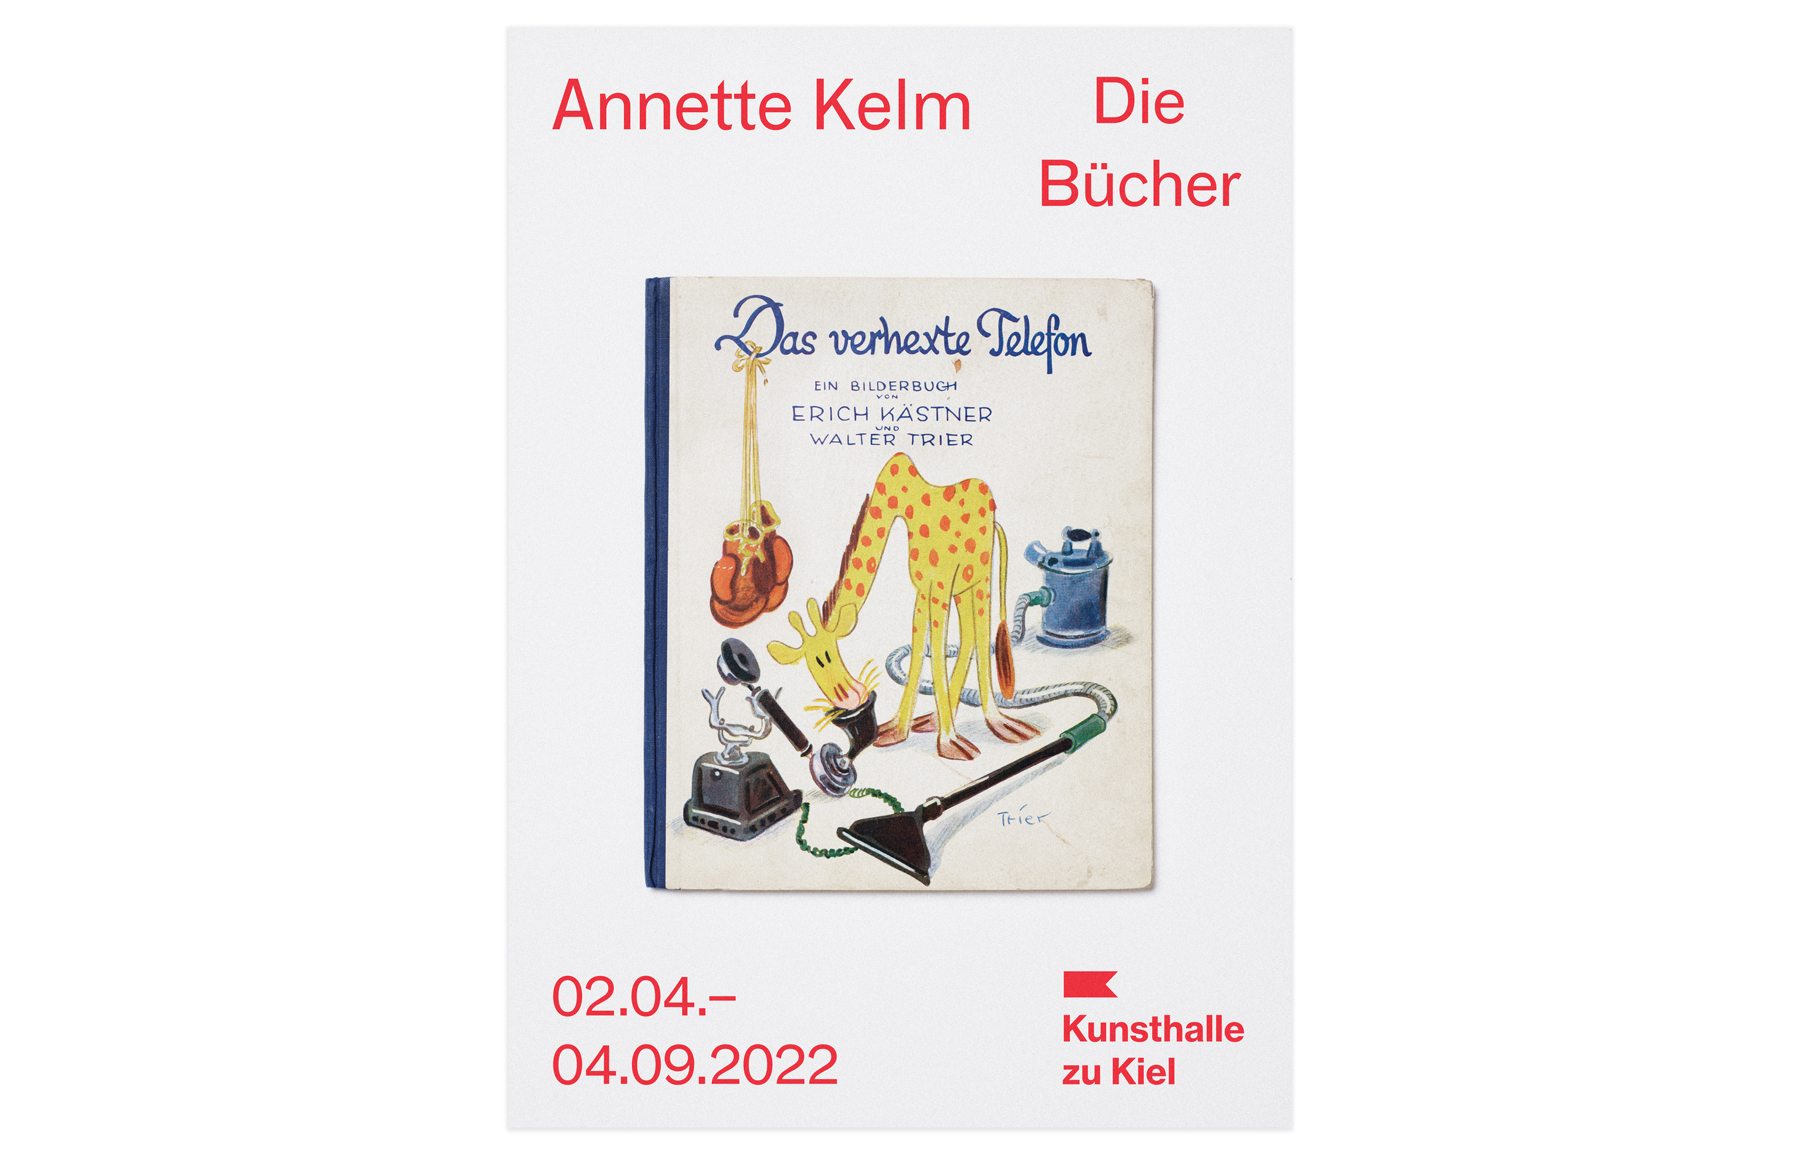 Annette Kelm Die Buecher Plakat